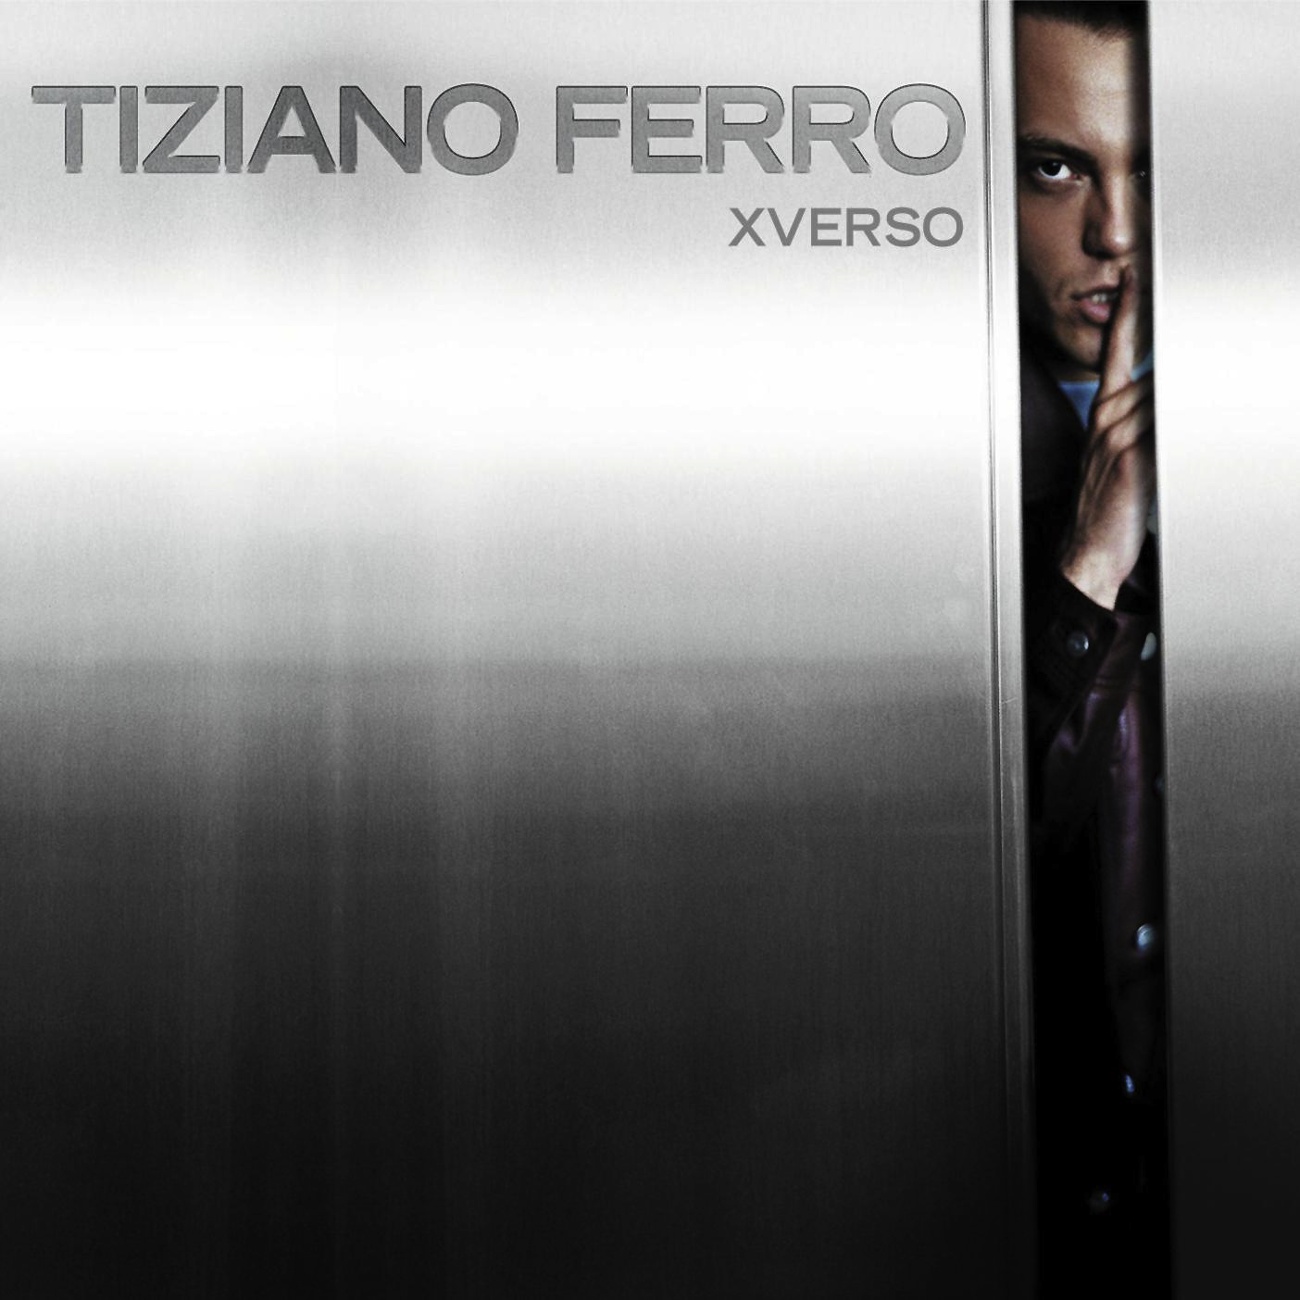 Perverso (Album International Version)